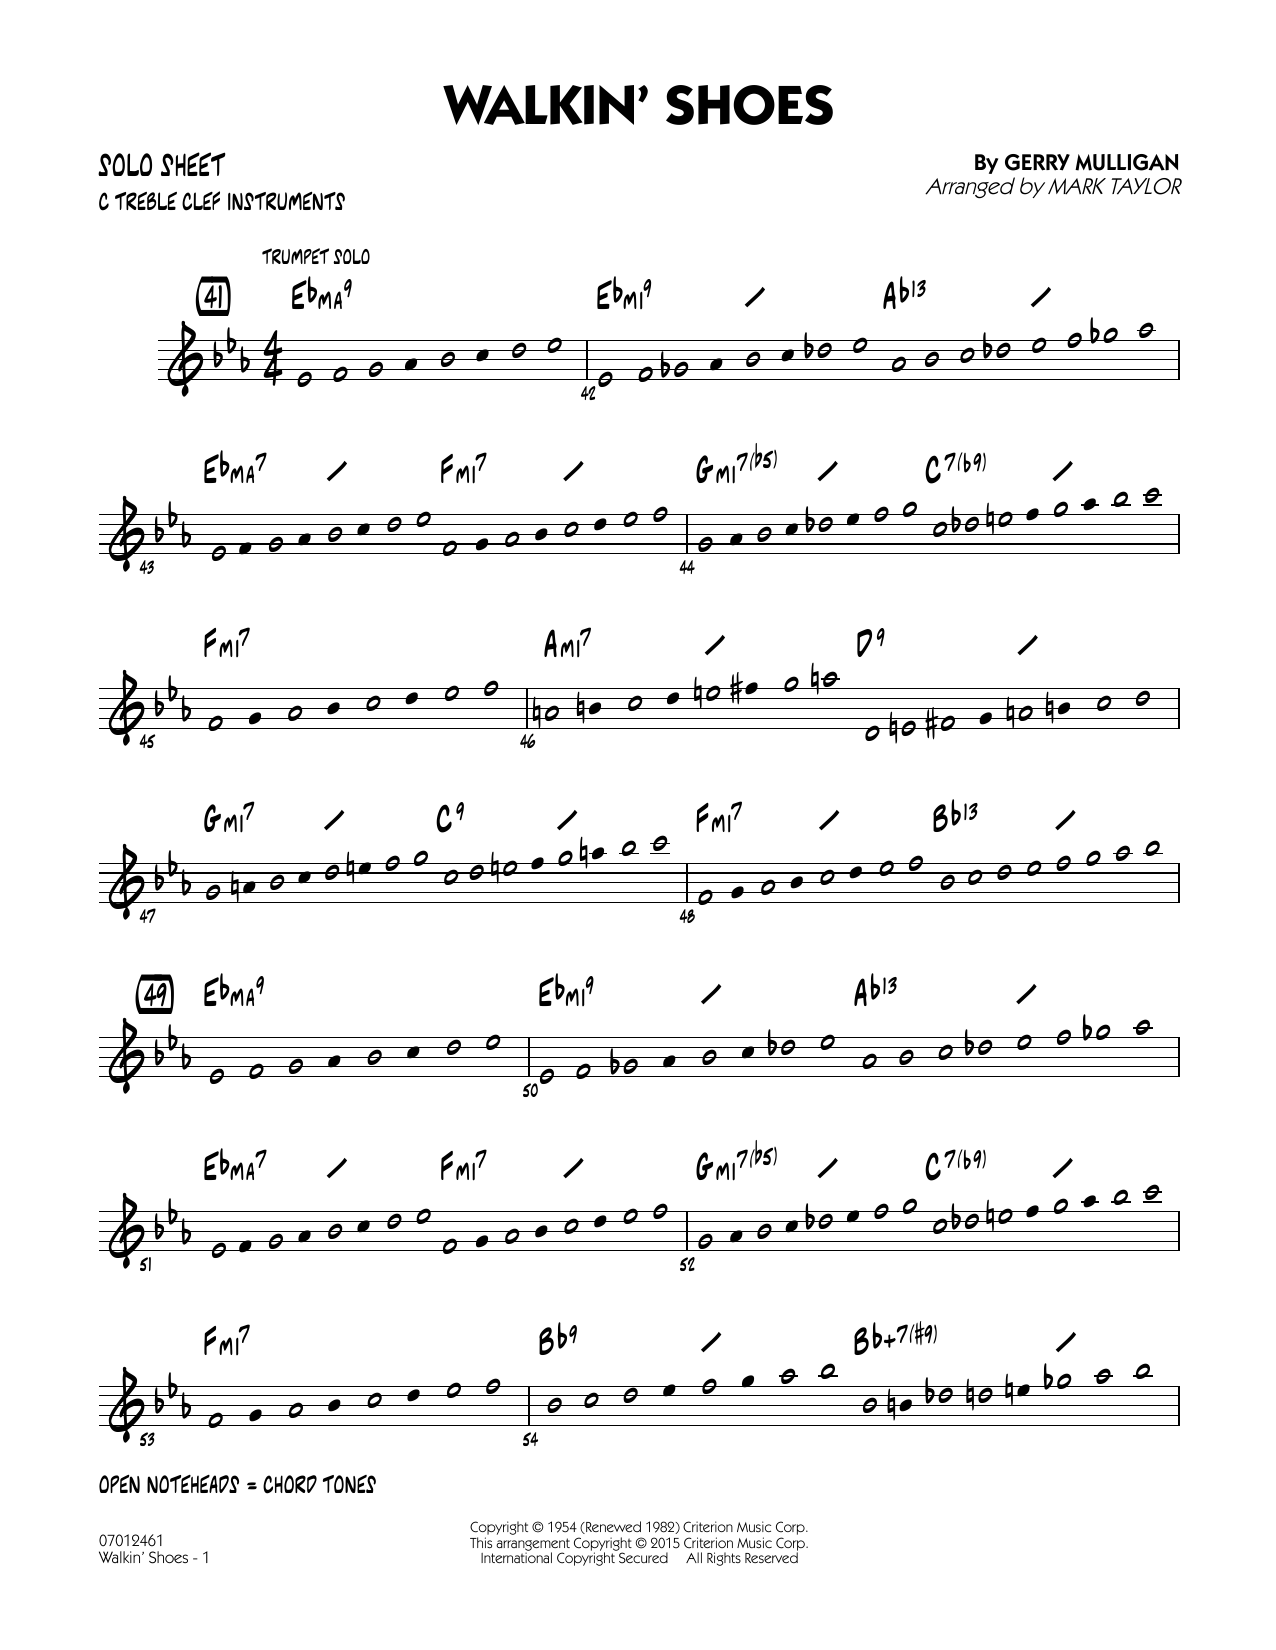 Mark Taylor Walkin' Shoes - C Solo Sheet sheet music notes and chords. Download Printable PDF.